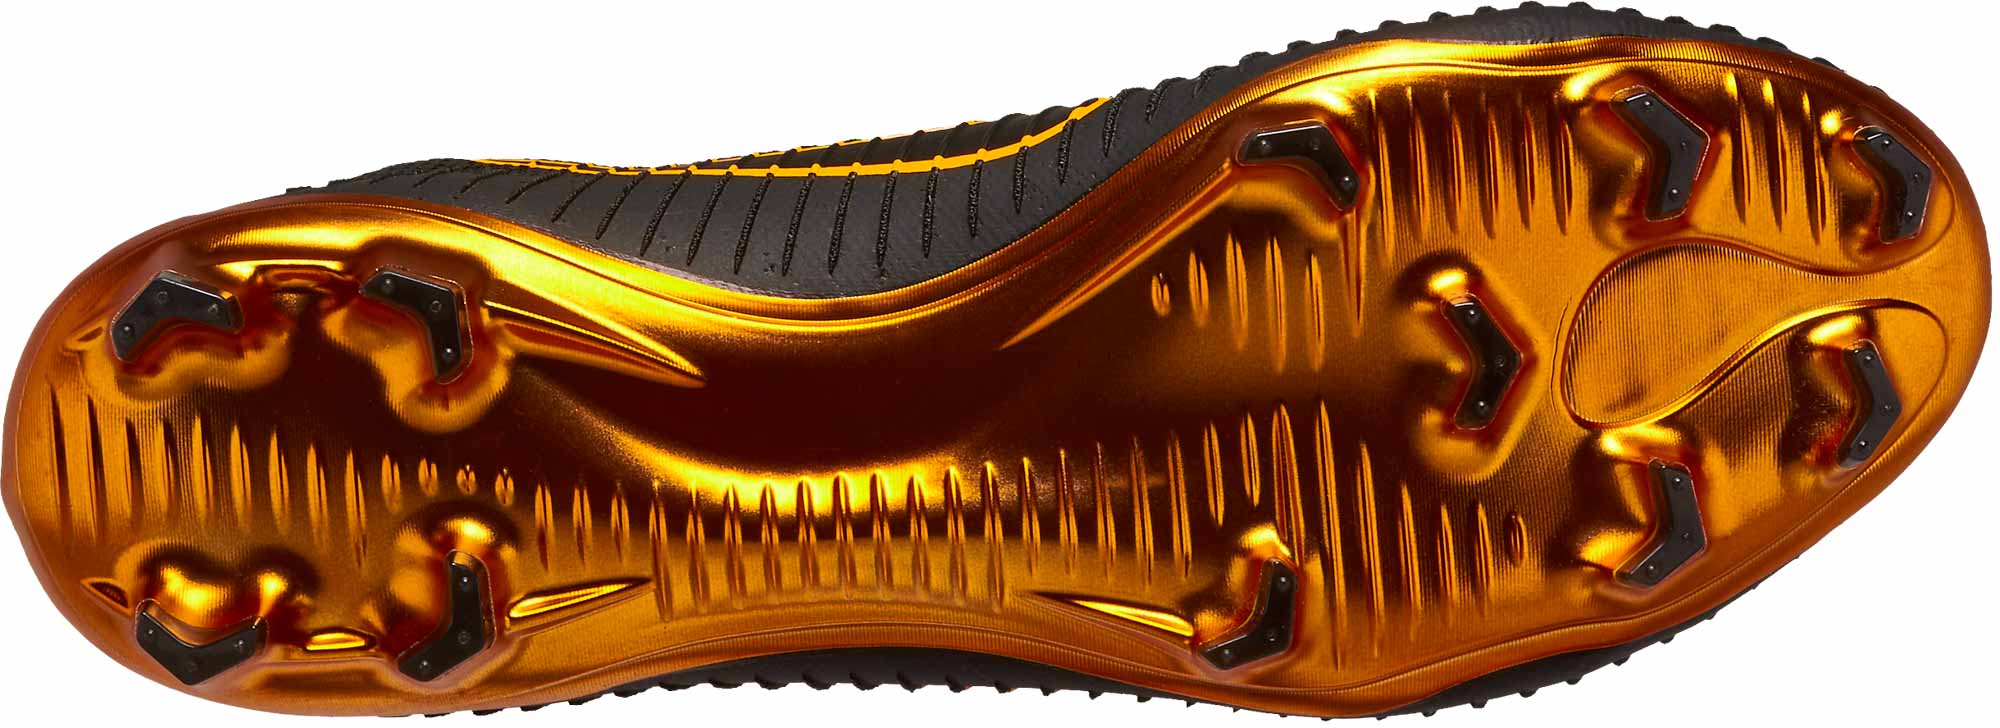 Nike Flyknit Ultra FG - Black & Laser Orange - Master